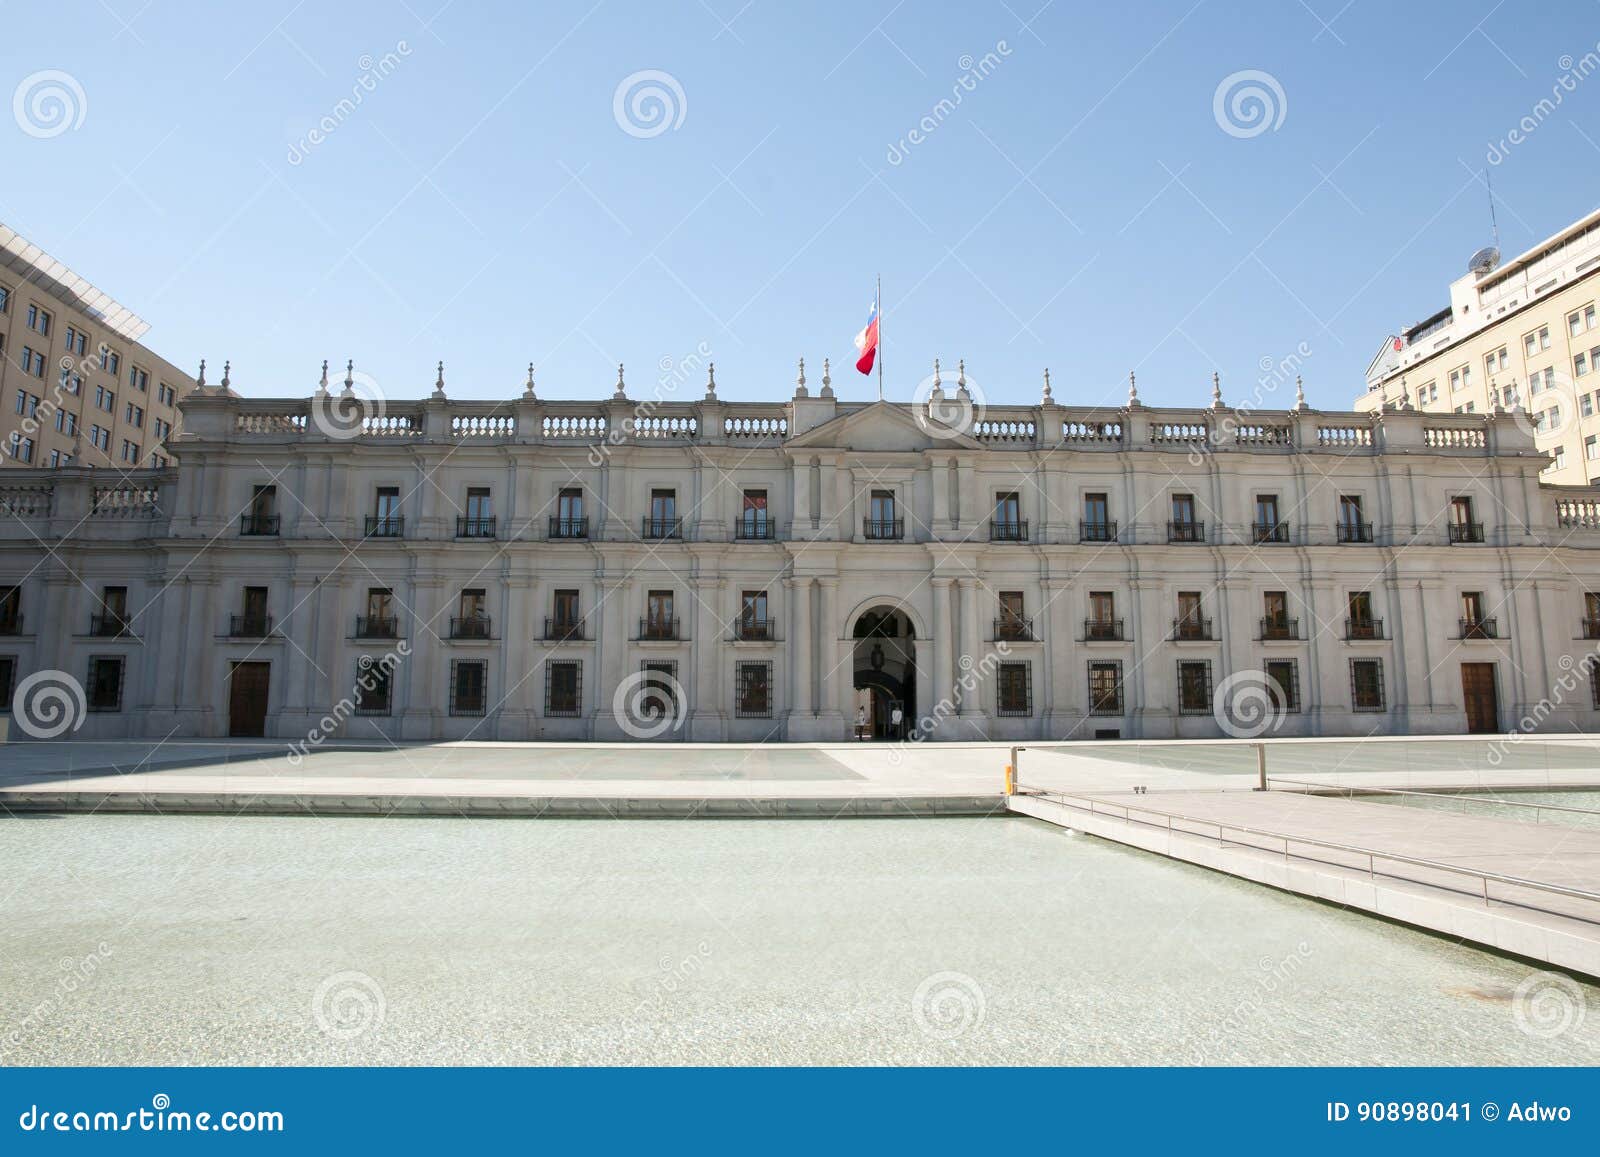 la moneda presidential palace - santiago - chile